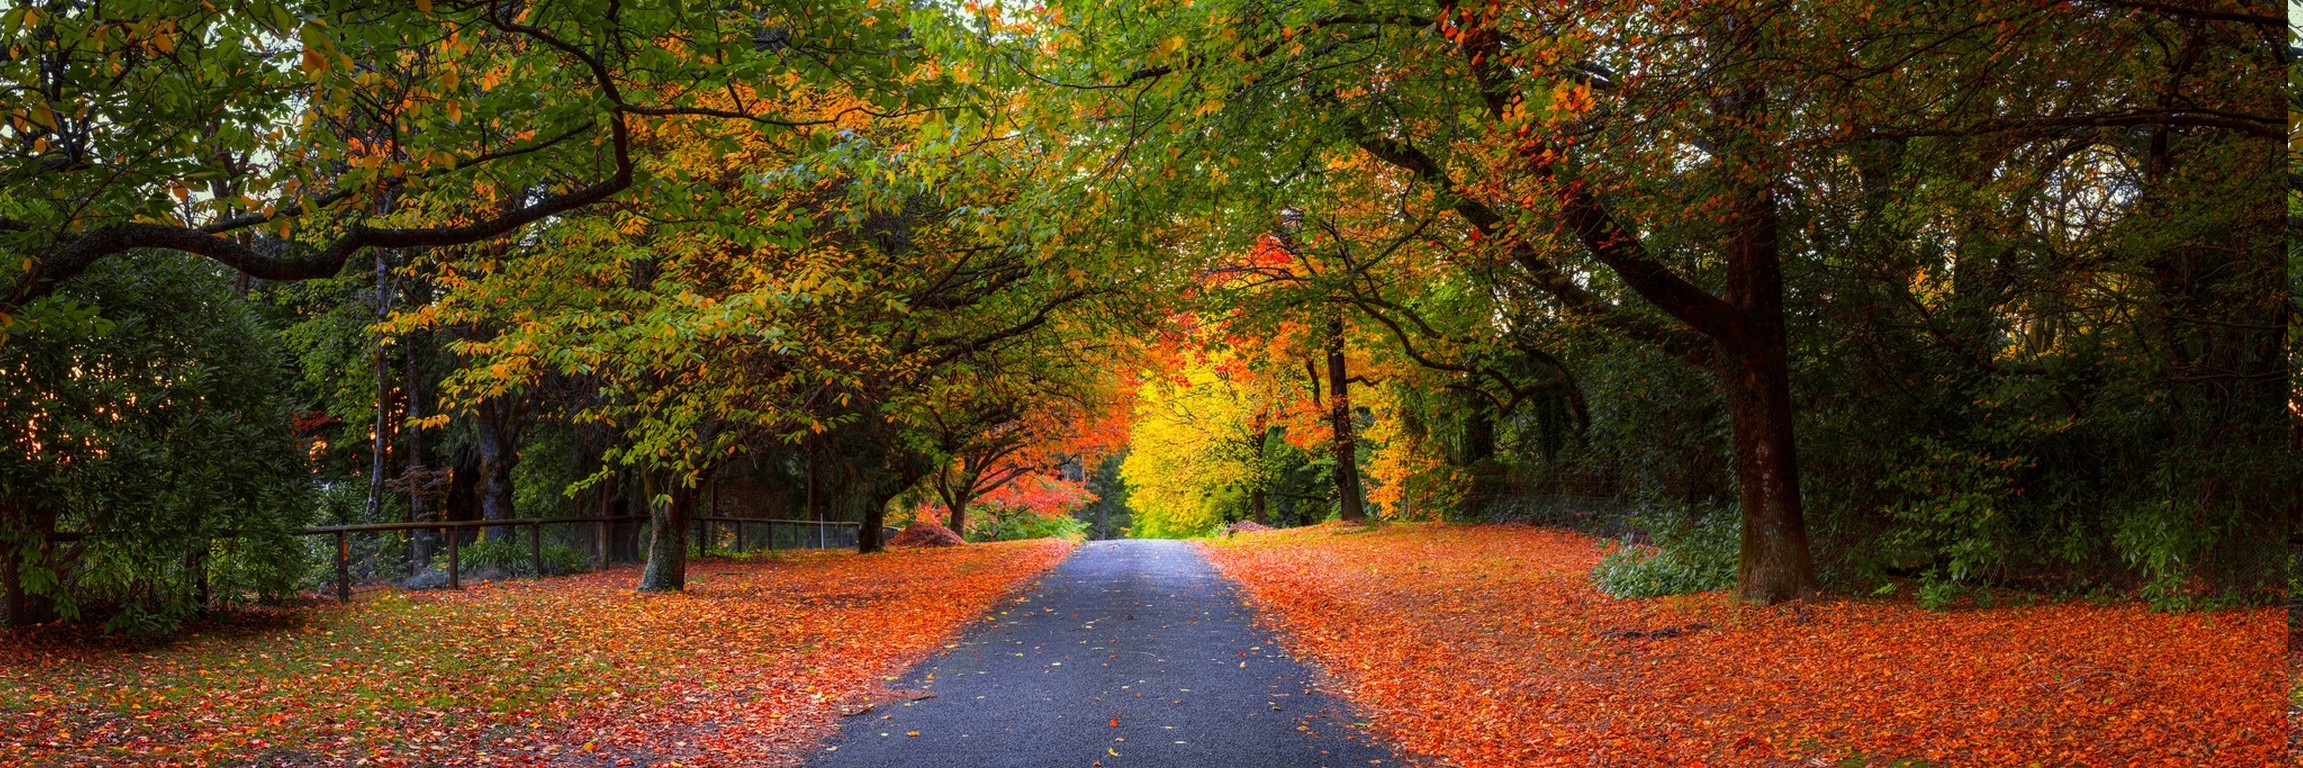 road, Trees, Fall, Fence, Nature, Landscape, Foliage, Orange, Green, Yellow Wallpaper